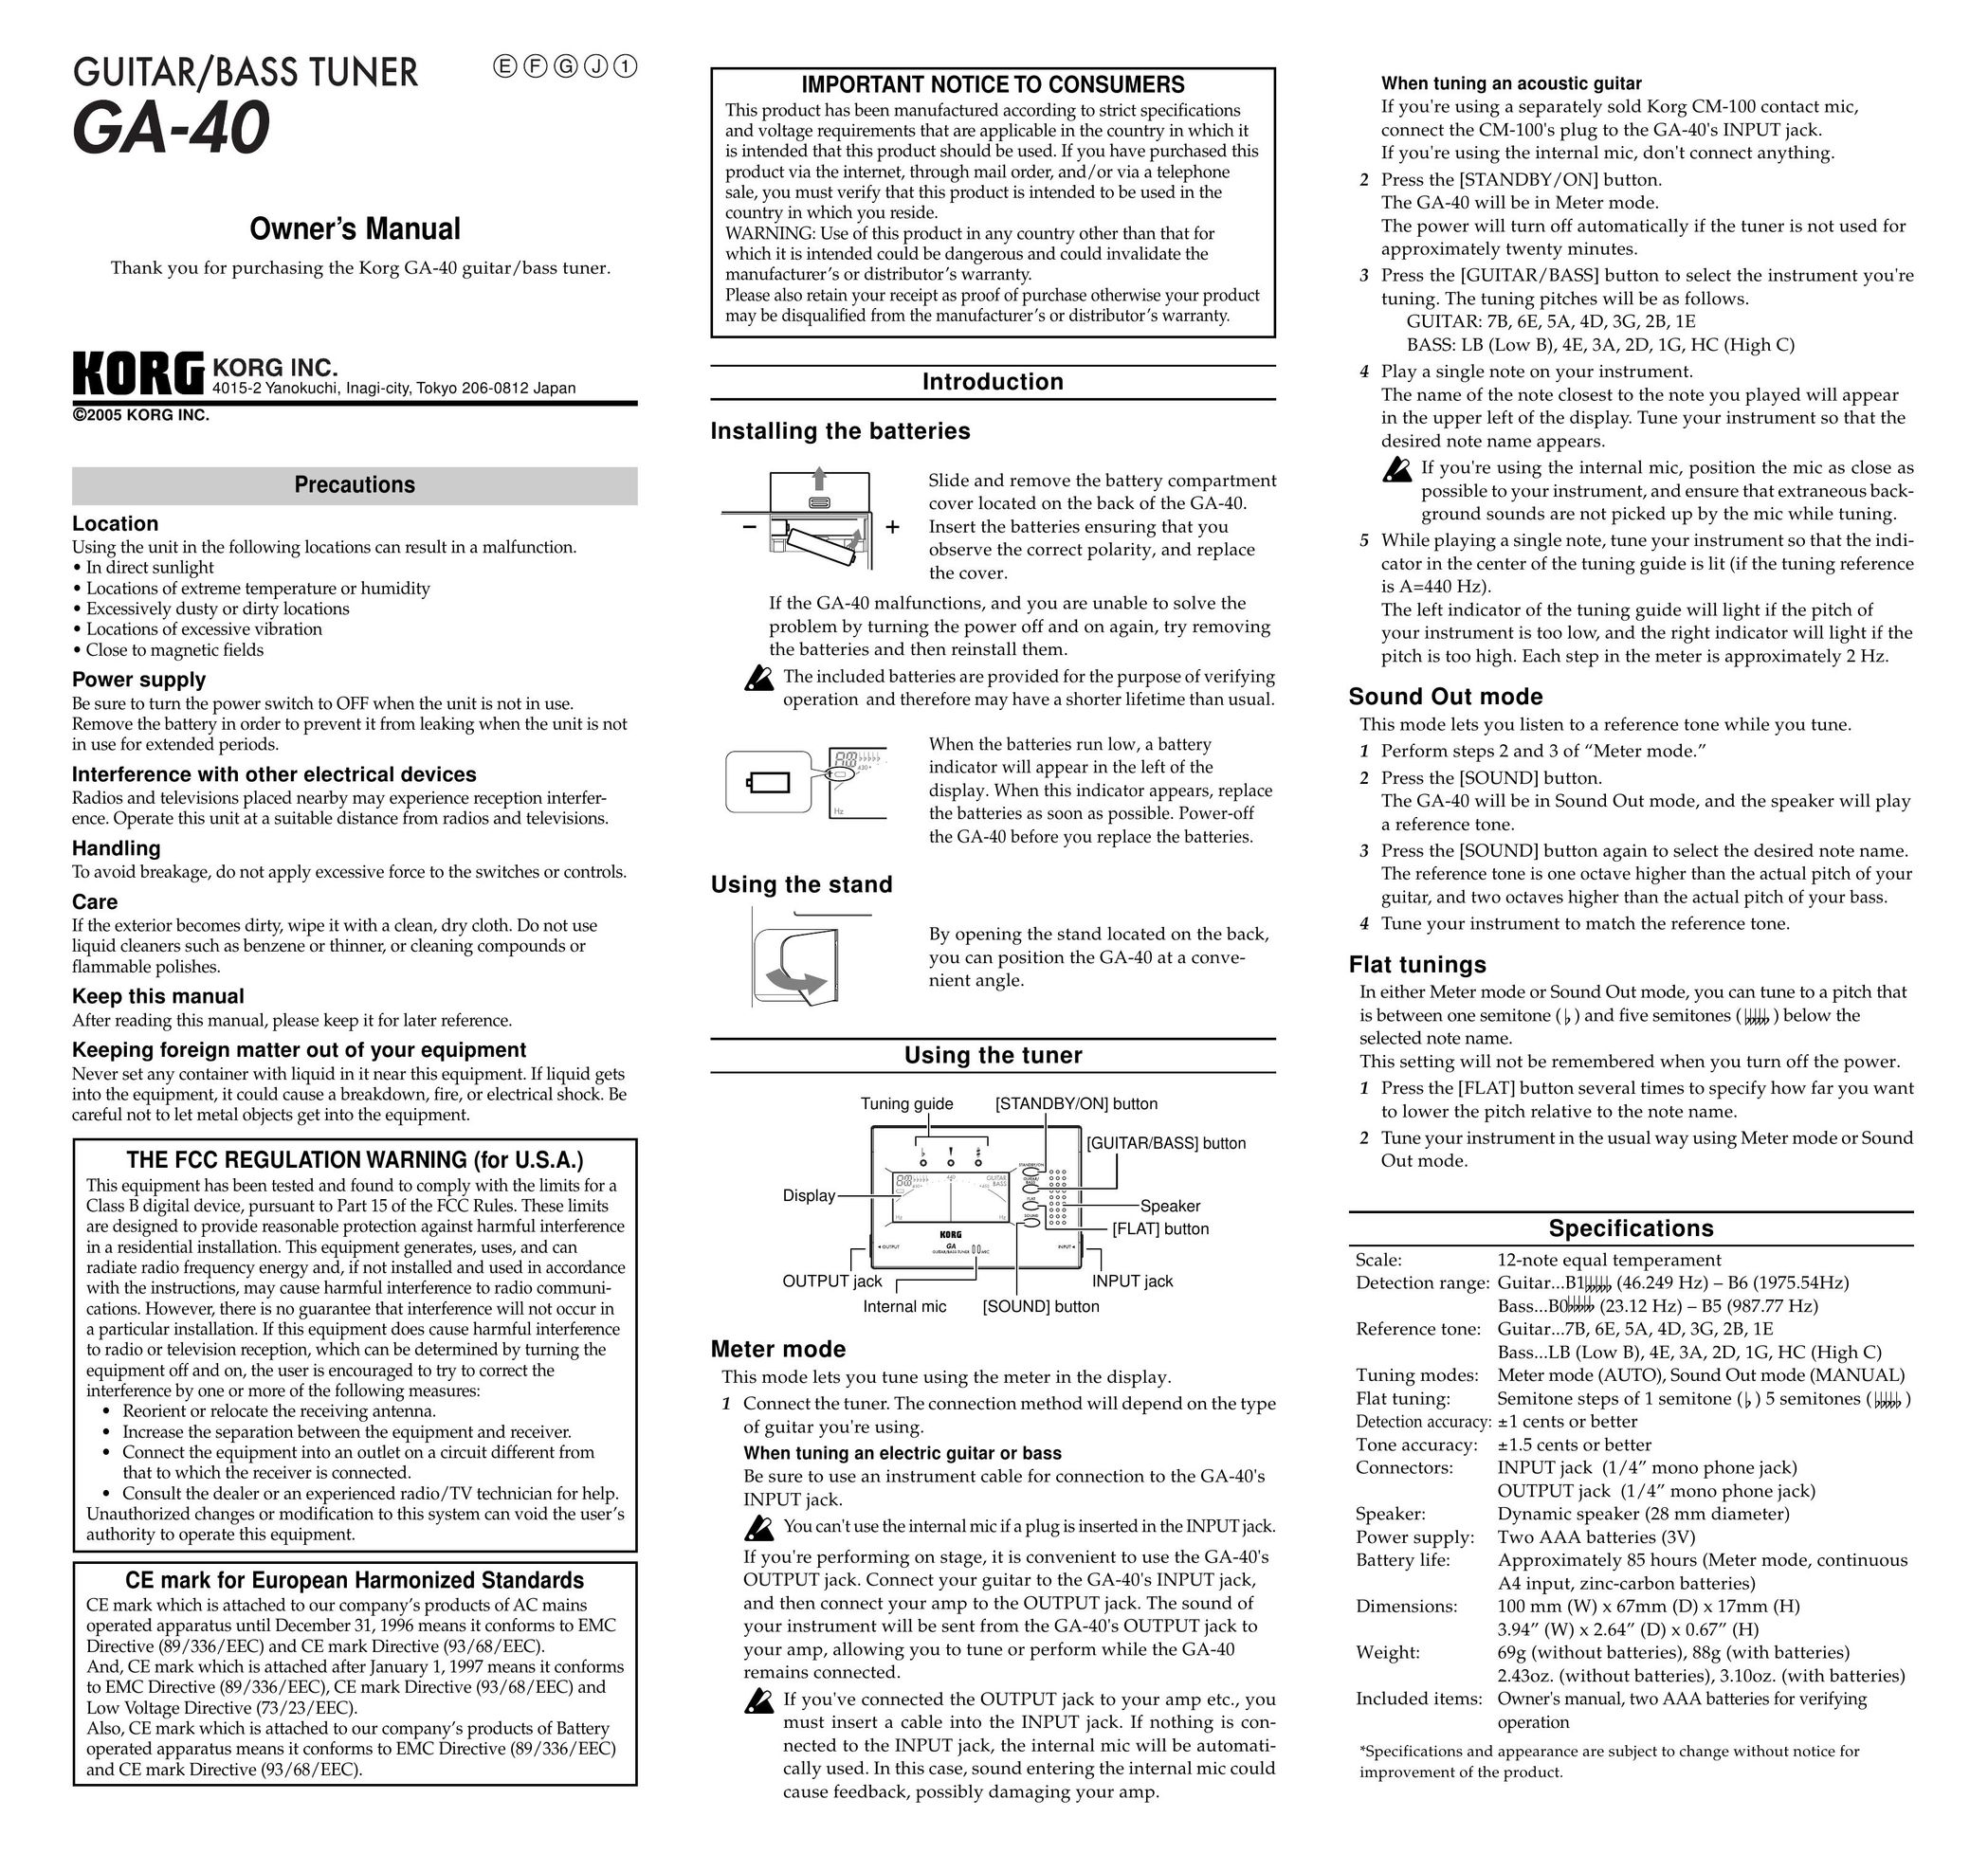 Korg GA-40 Convection Oven User Manual